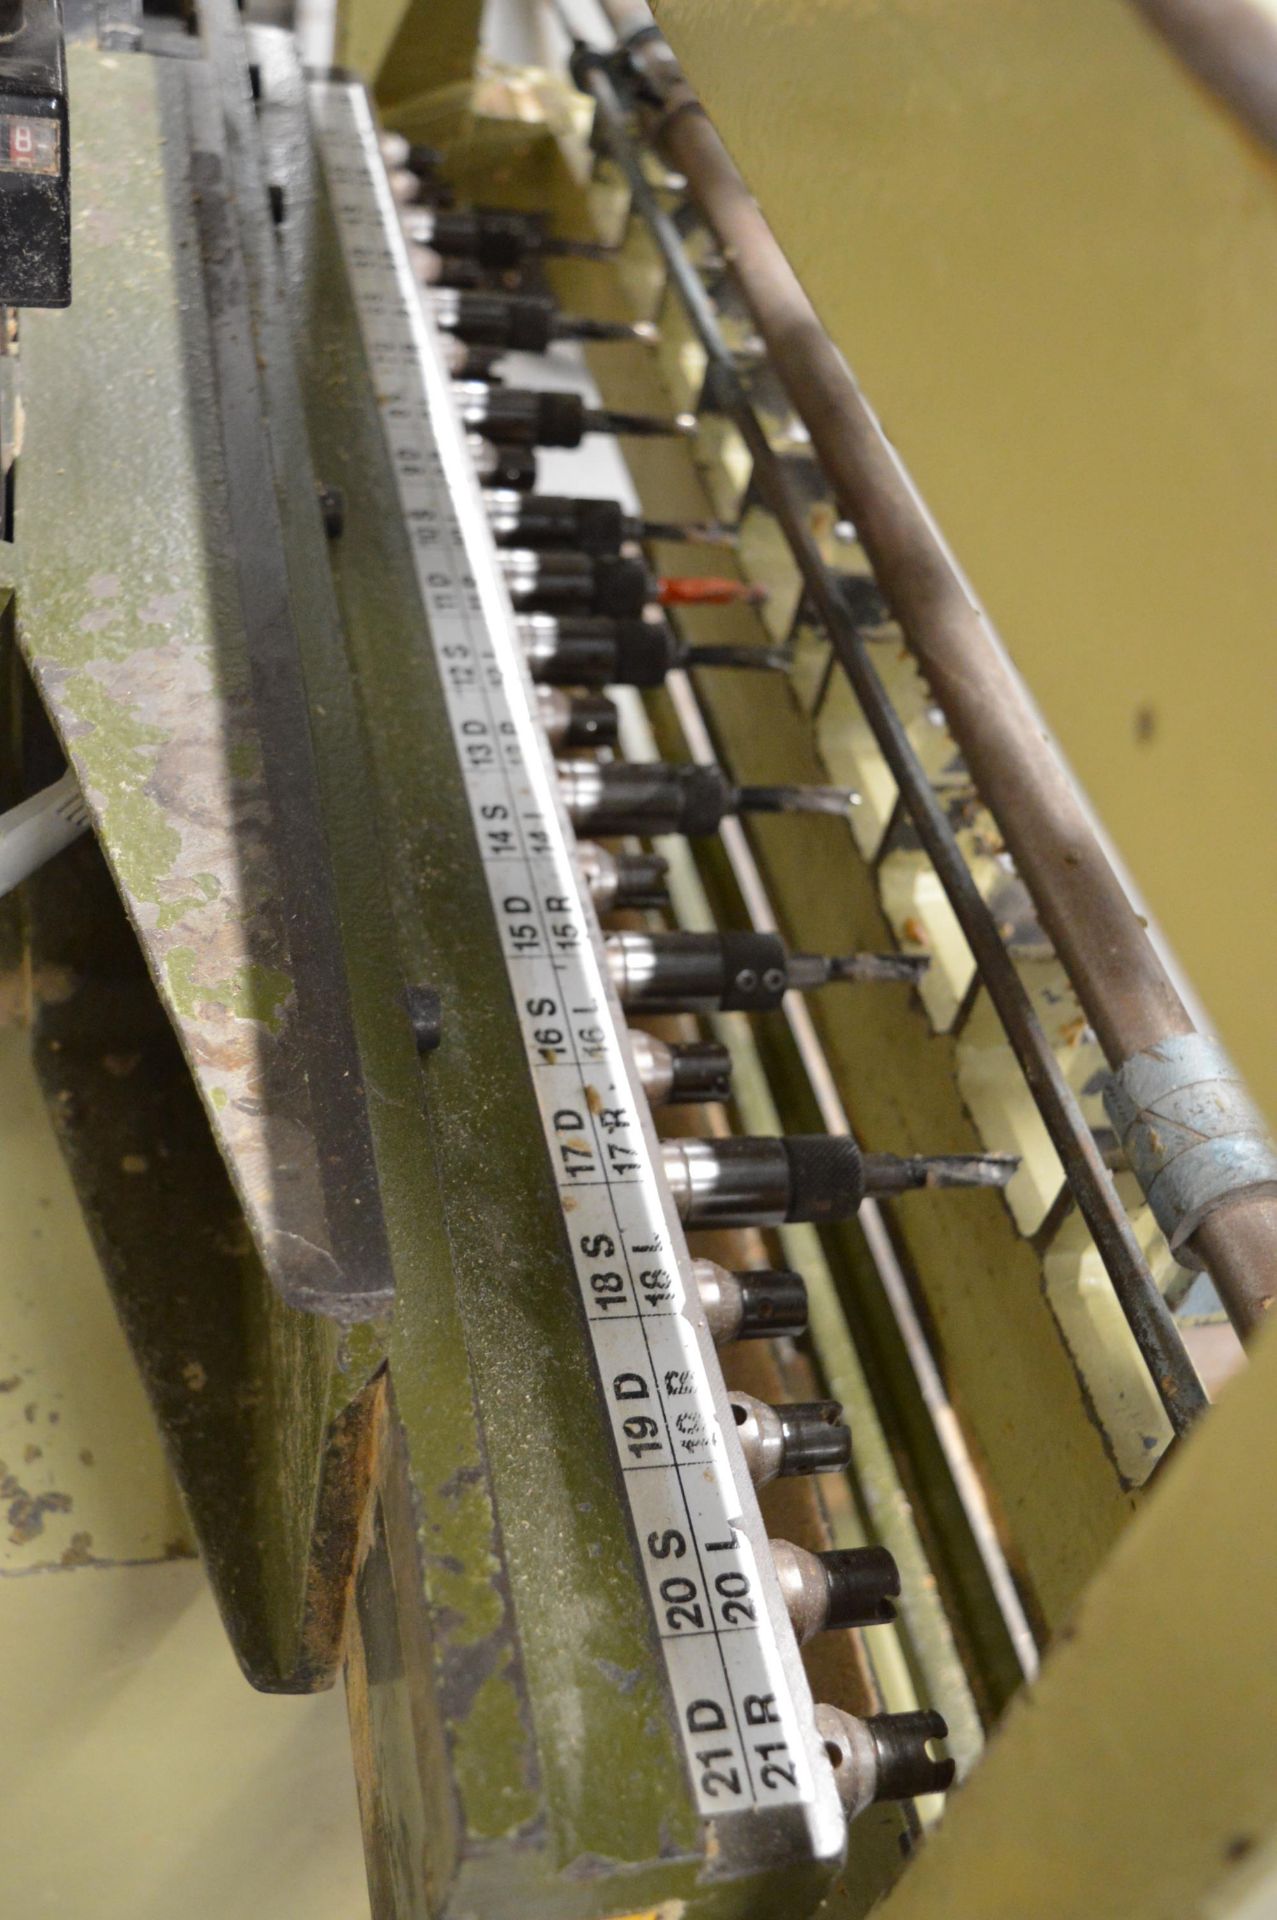 Zangheri & Boschetti, Type: Ligna multi head (21) horizontal drilling machine, Serial No. 452141 ( - Image 4 of 7